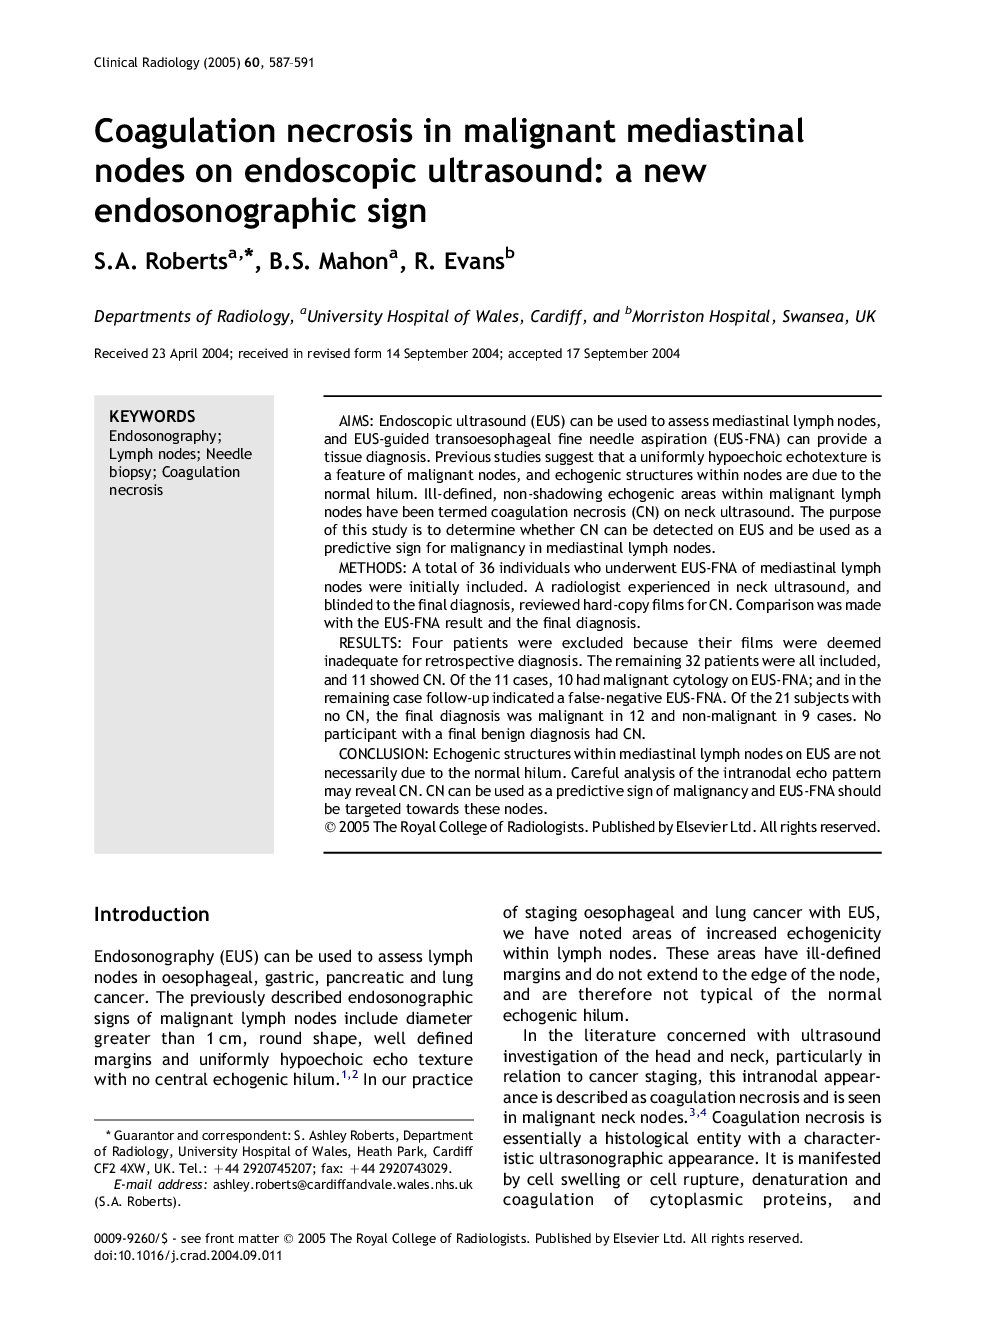 Coagulation necrosis in malignant mediastinal nodes on endoscopic ultrasound: a new endosonographic sign